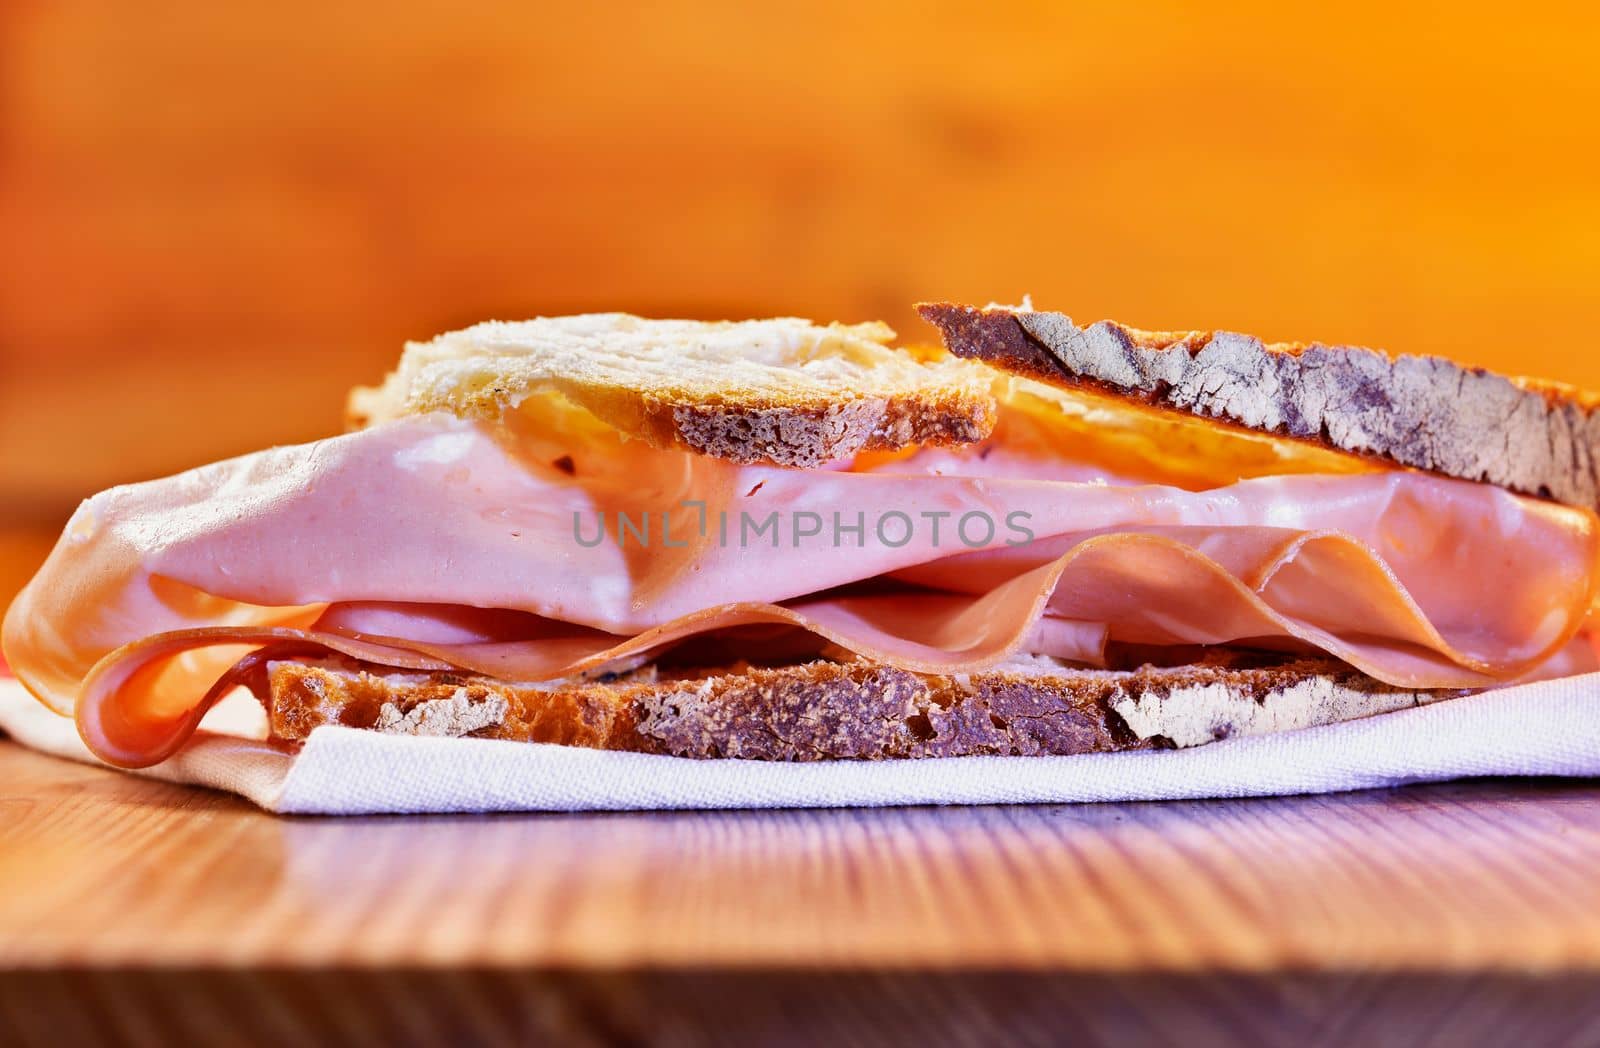 Sandwich with ham by victimewalker